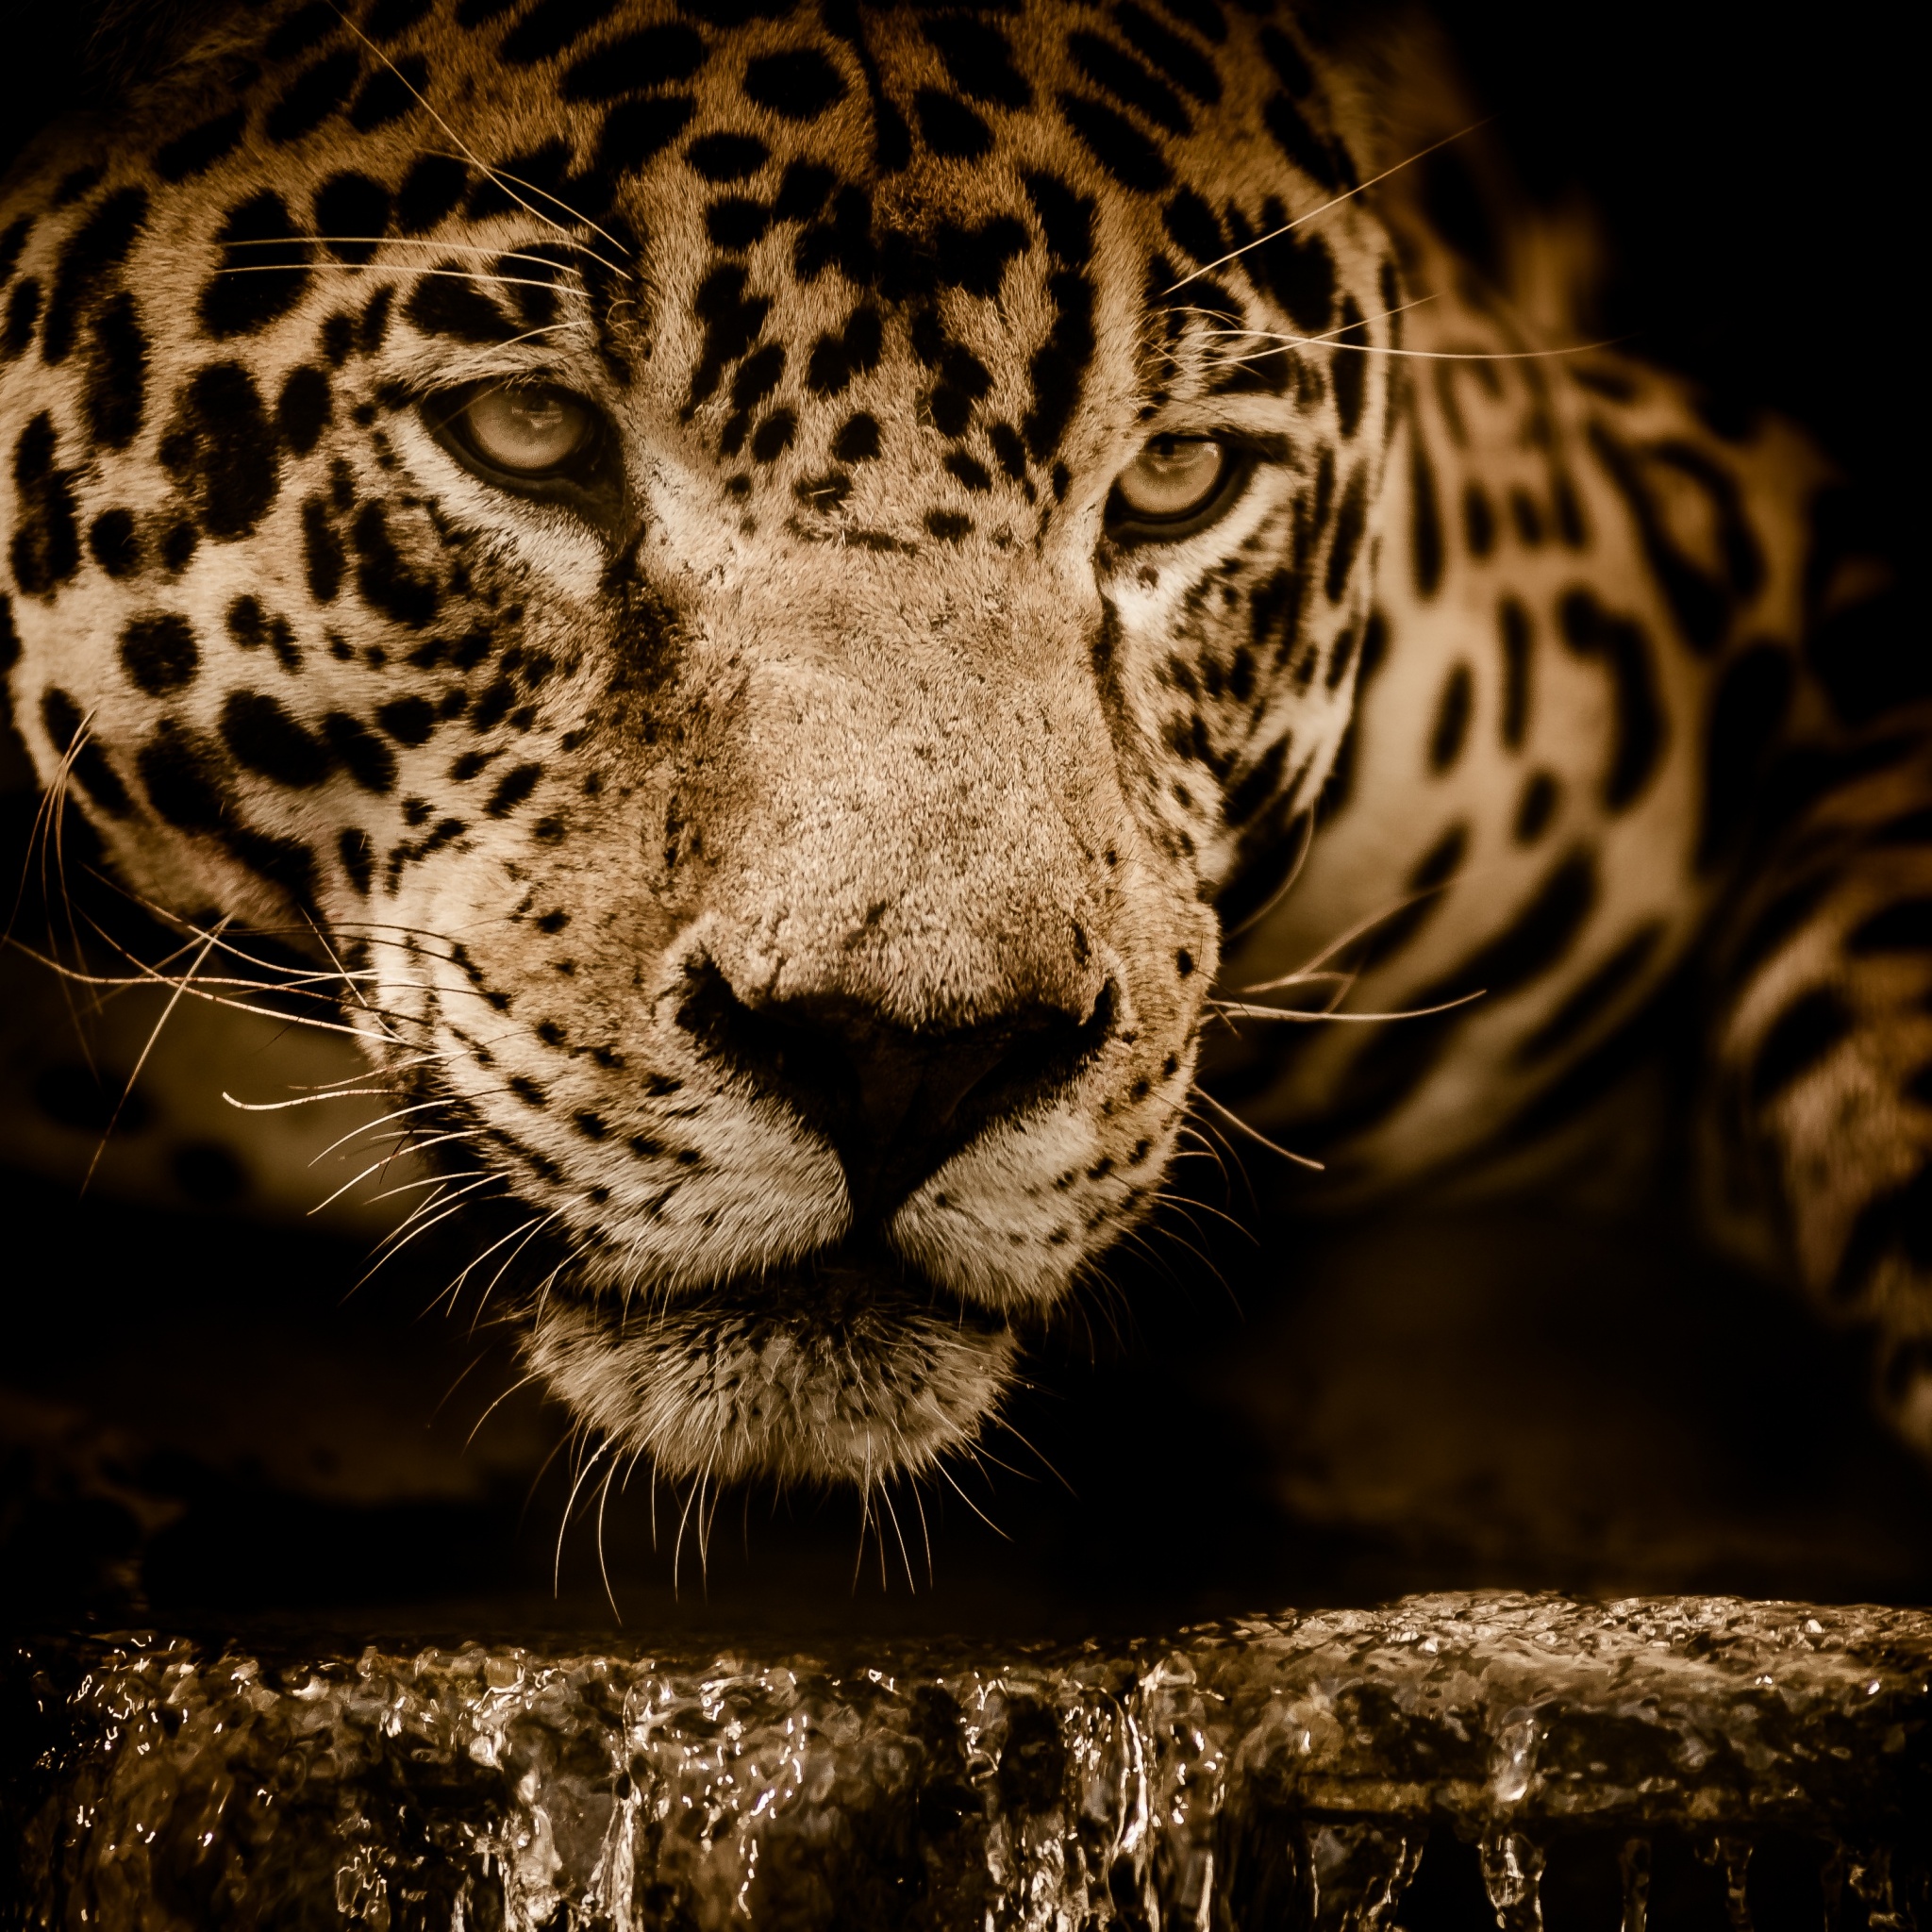 An Image Of A Black Jaguar Background A Picture Of Black Panther  Background Image And Wallpaper for Free Download